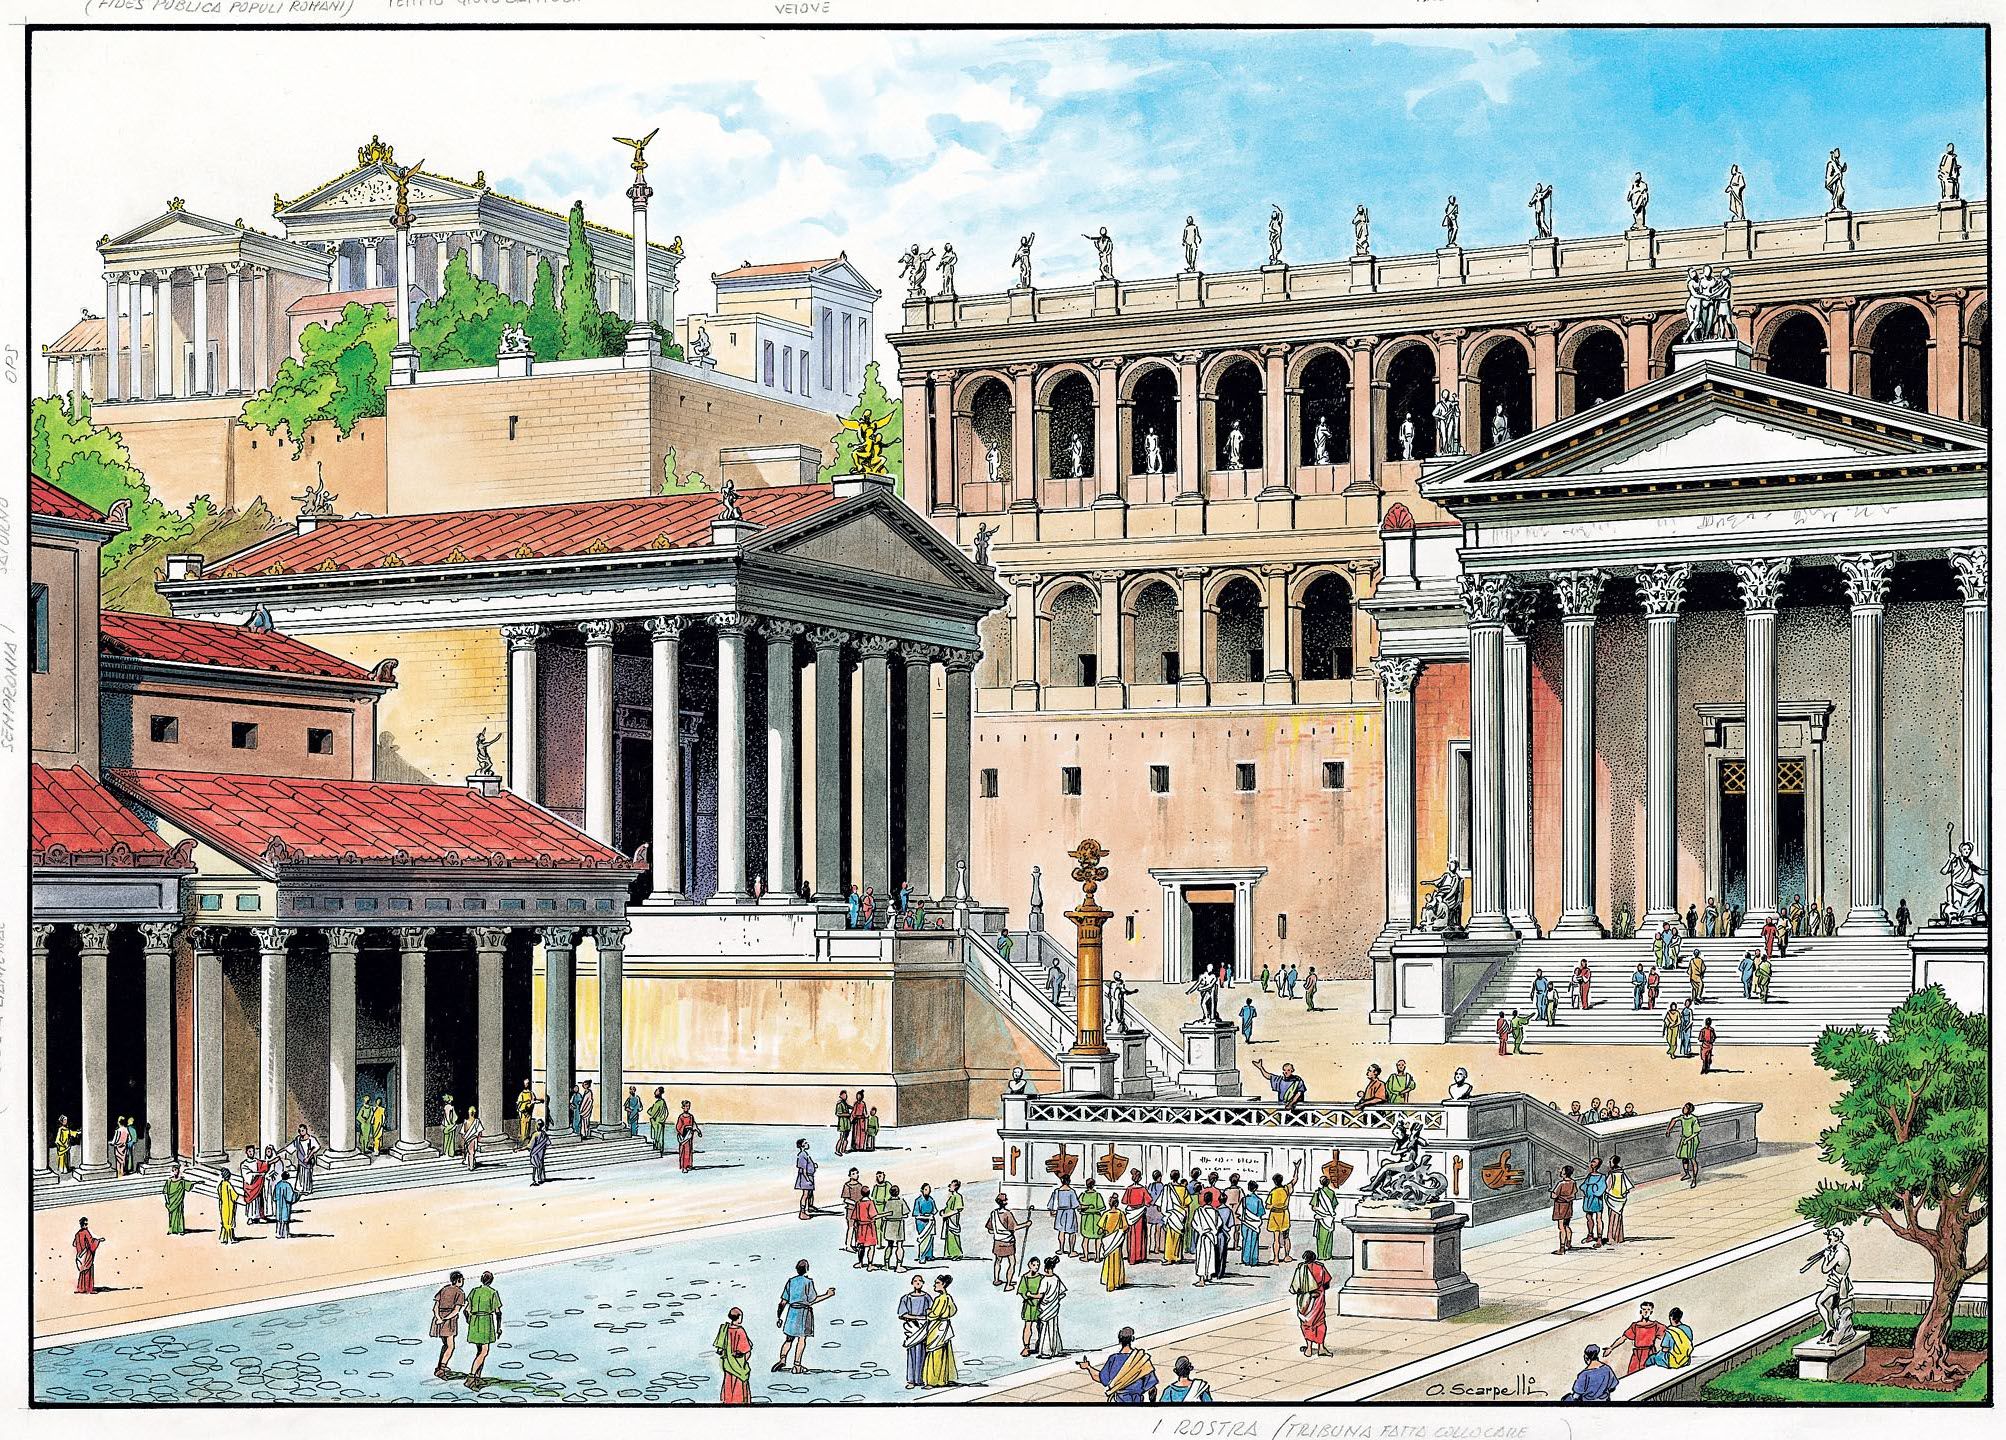 Archaeology Art On Twitter Reconstruction Sketch Of Romanforum Rome Photo Credit O Scarpelli Roman Forum Categories Https T Co J4stp7tvrx Https T Co Fzugrn9v5c